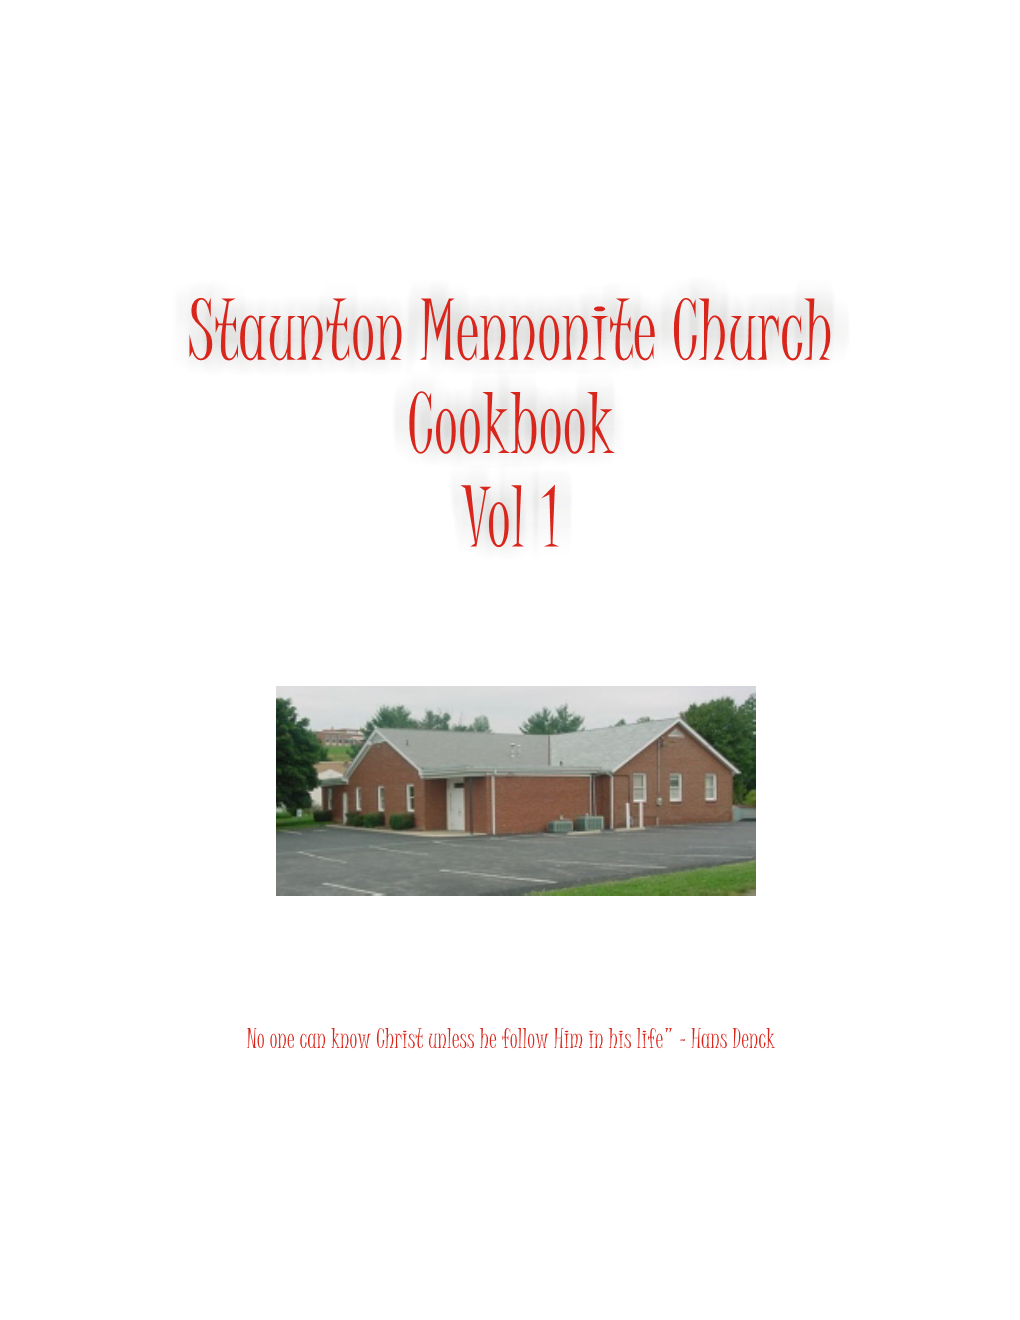 Staunton Mennonite Church Cookbook Vol 1